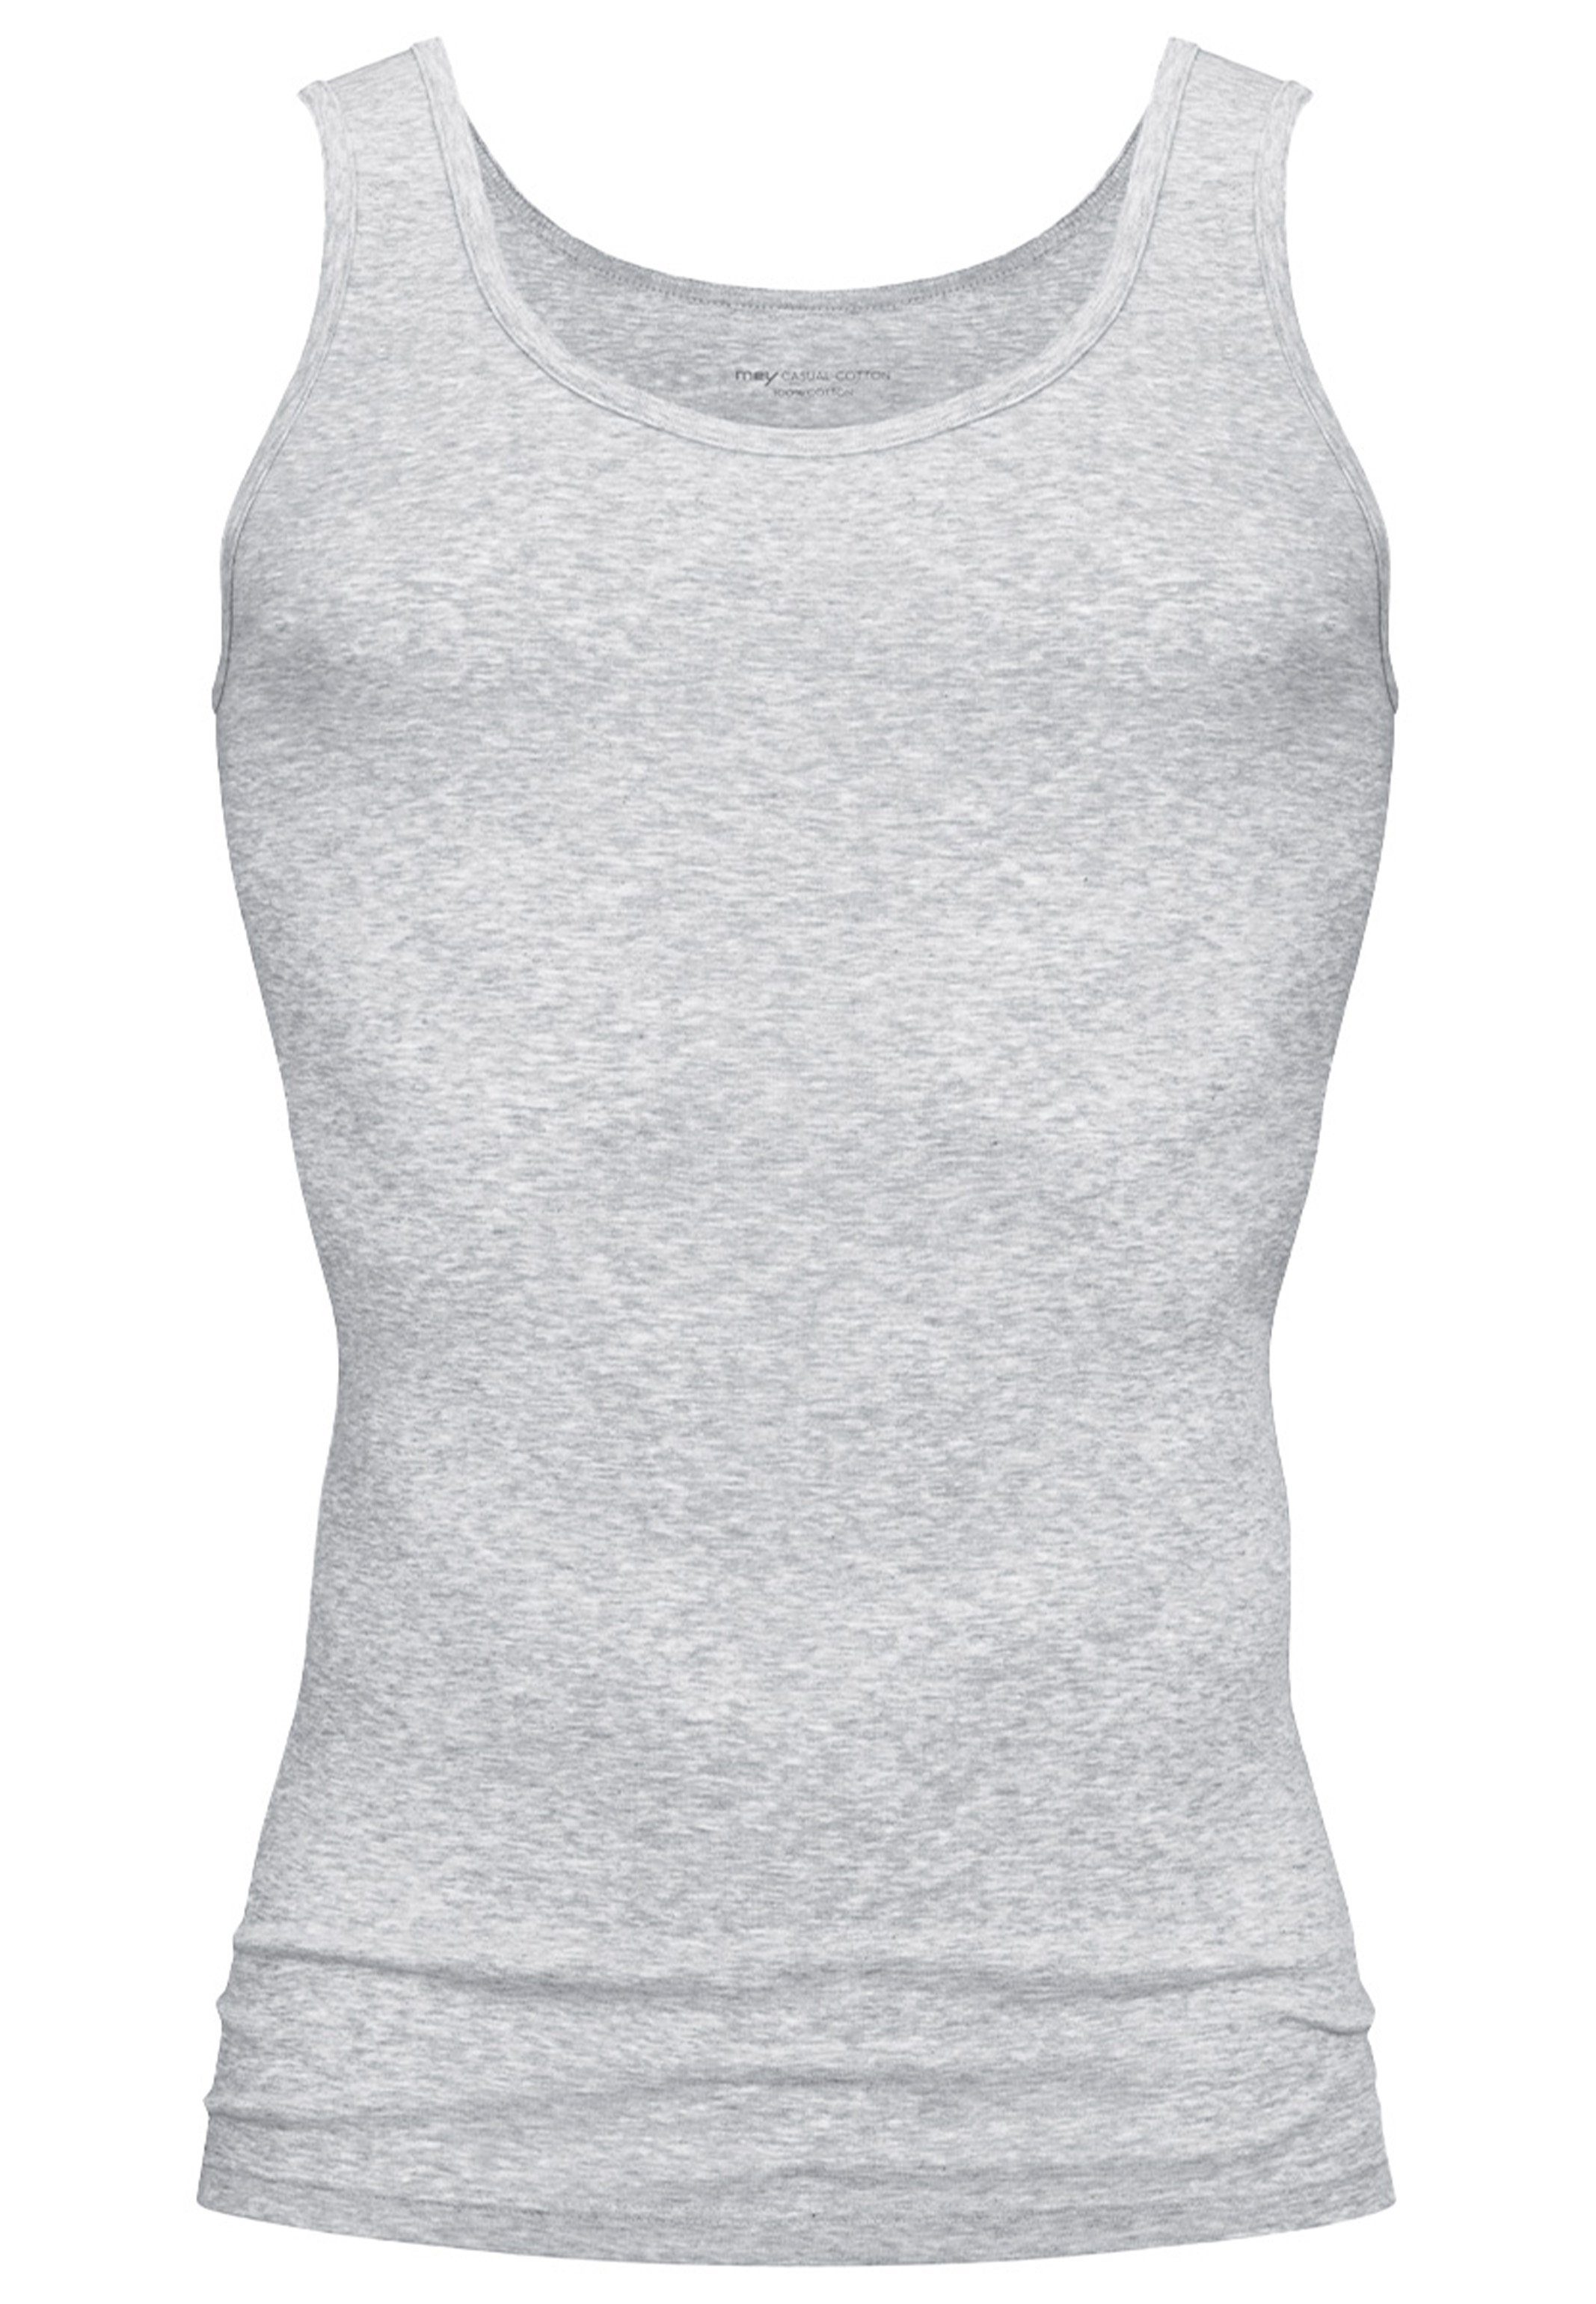 Mey Unterhemd Casual Cotton / - (1-St) grey Tanktop melange Light - Unterhemd Baumwolle